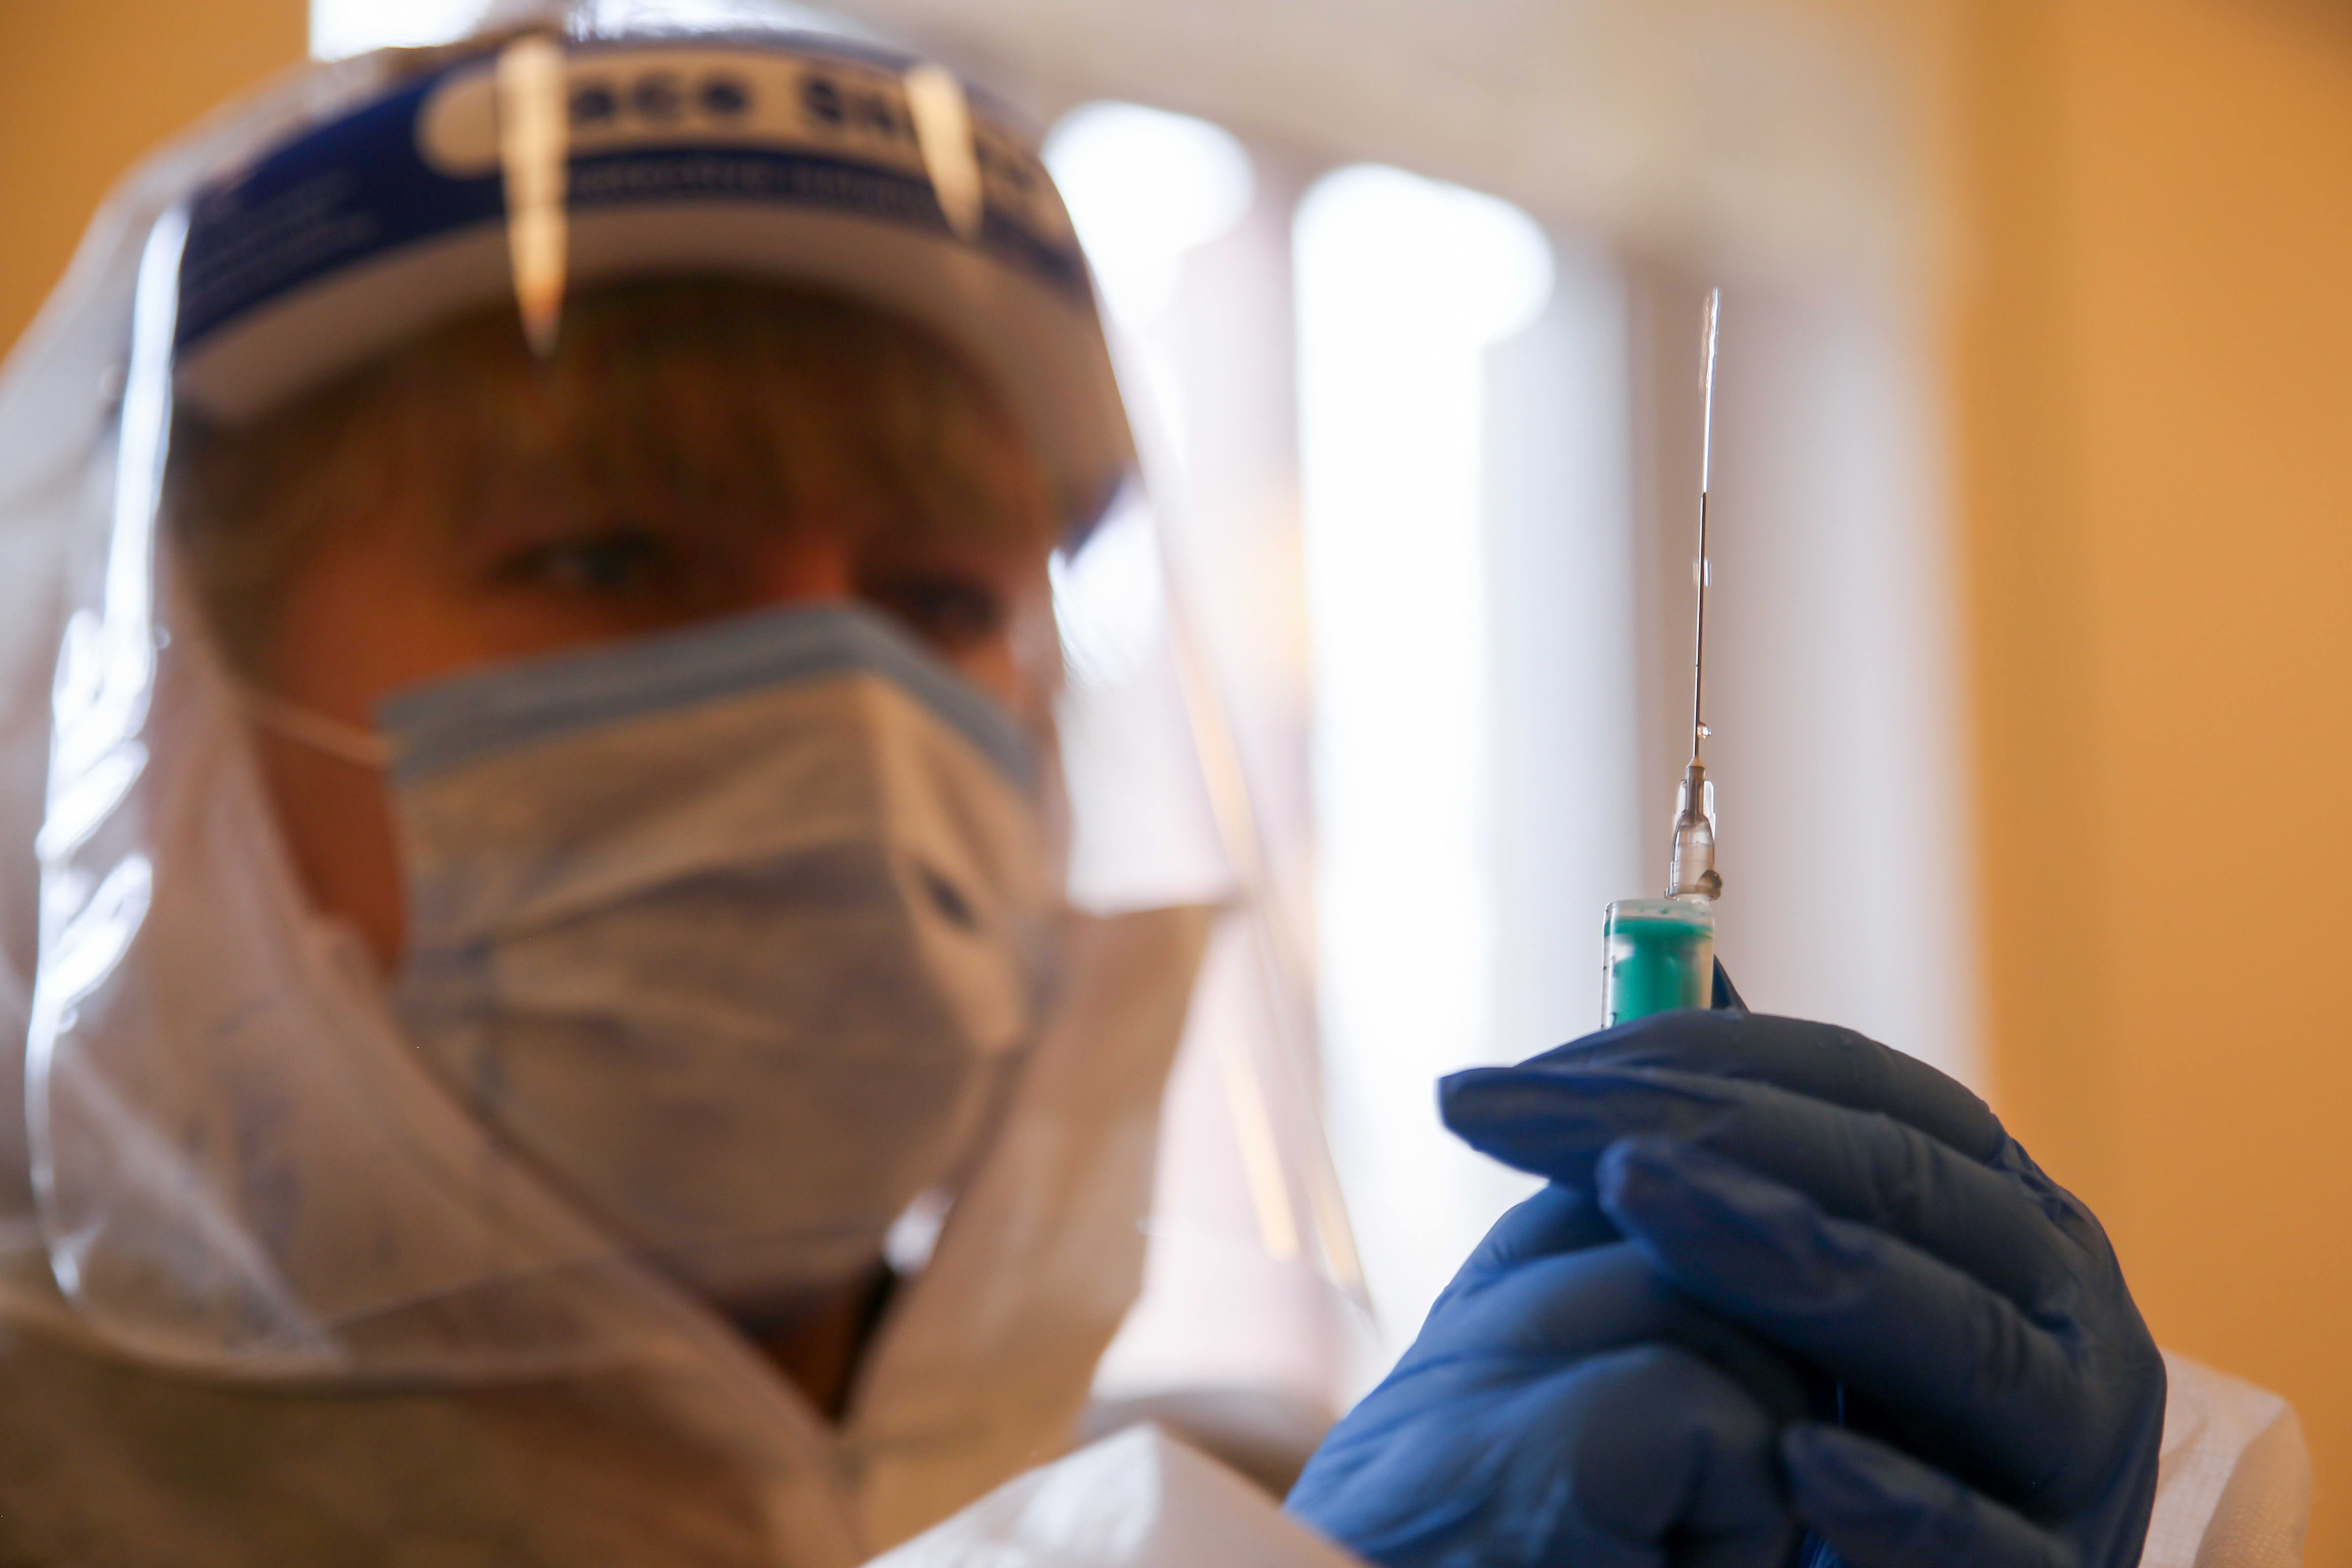 Russia’s Sputnik vaccine attracts Eastern Europe, worries EU